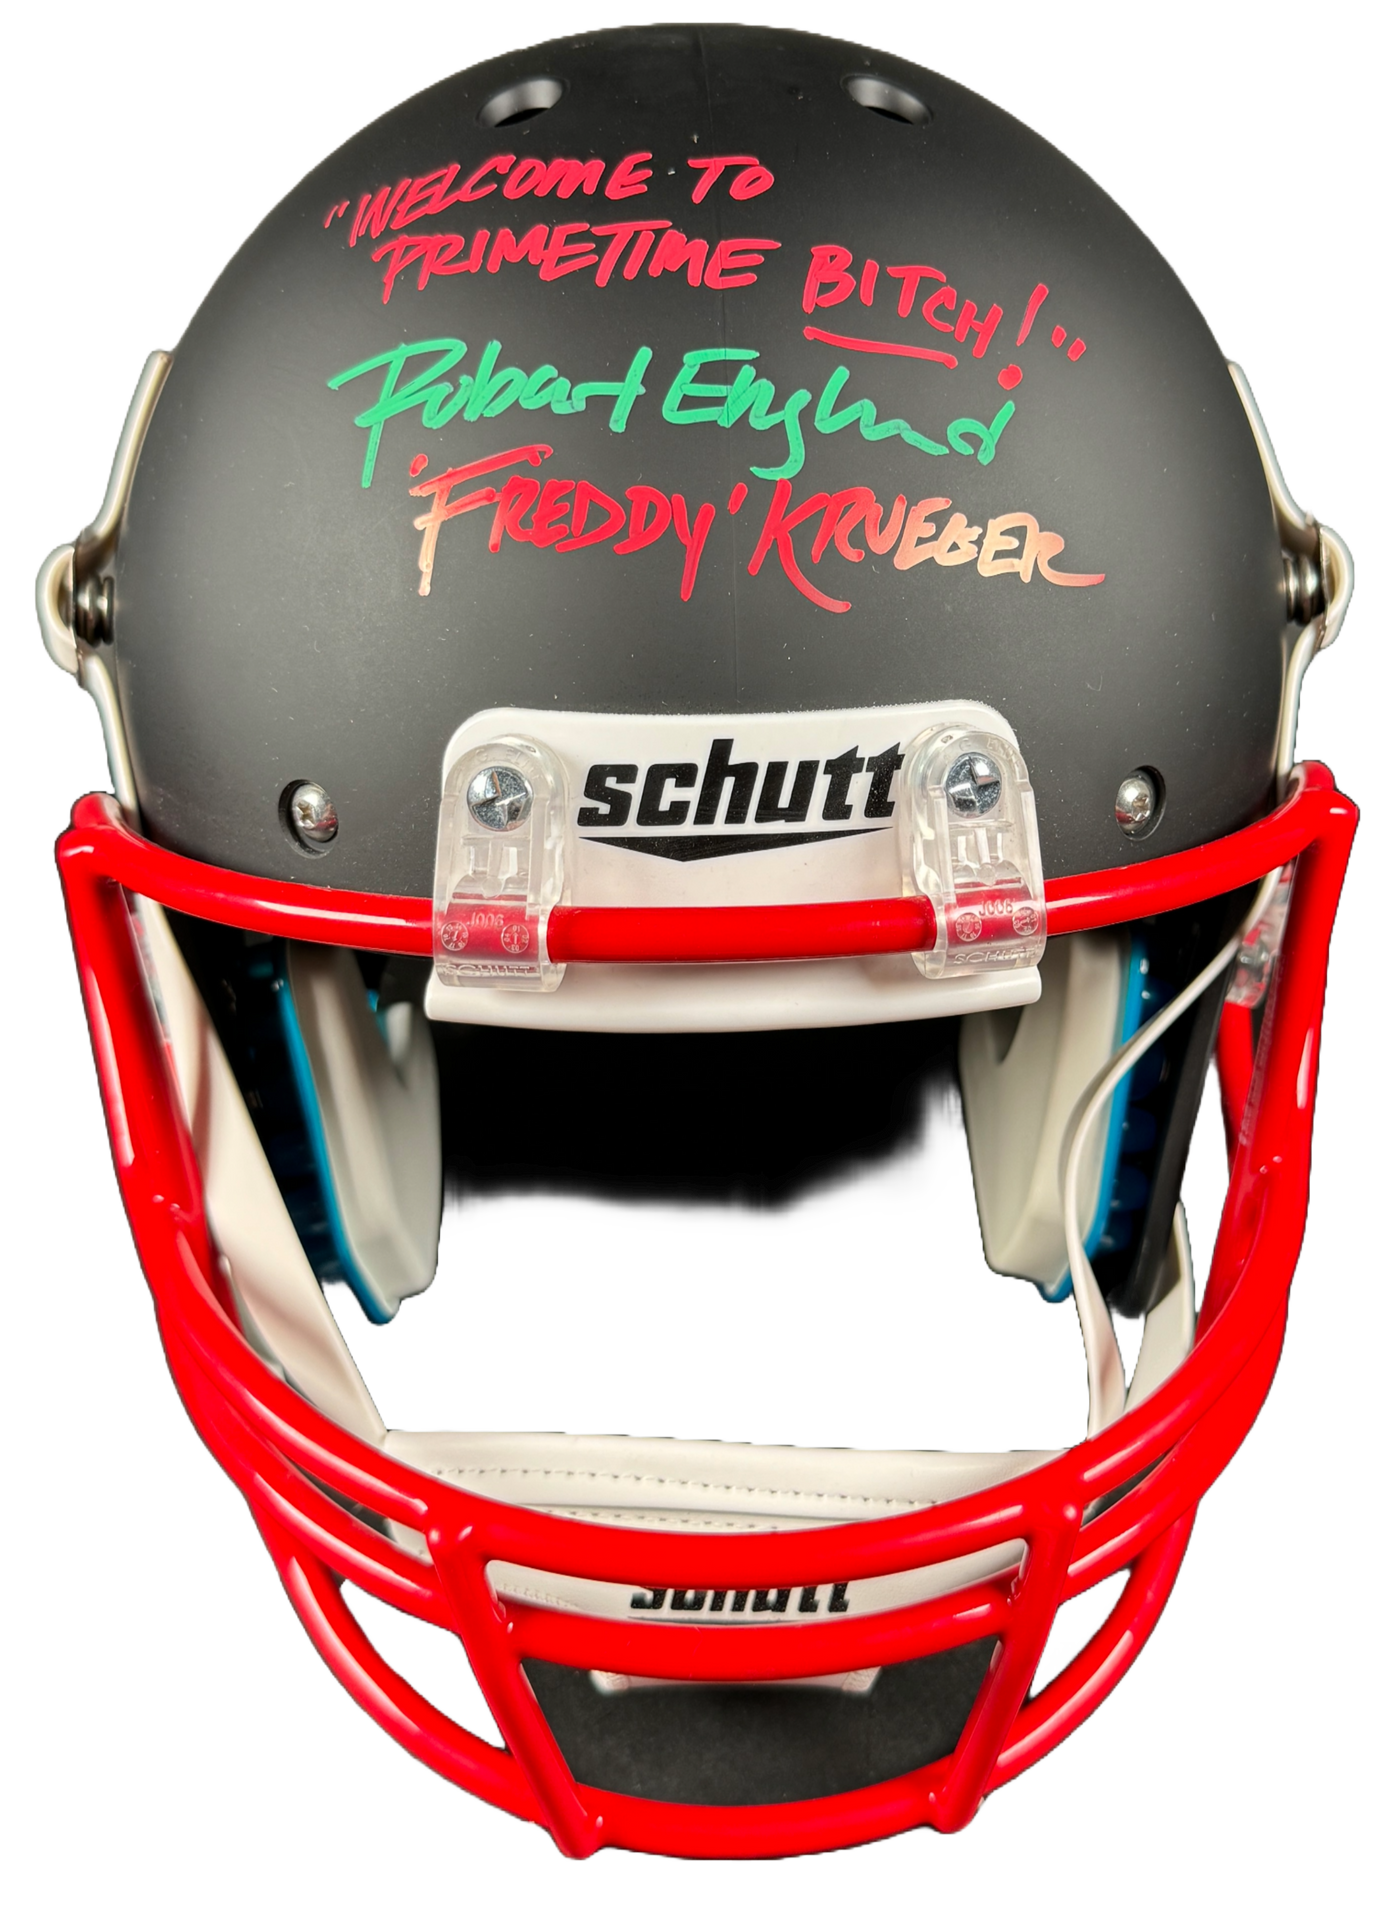 Robert Englund Signed Custom Freddy Krueger Full Size Helmet A Nightmare on Elm Street Autographed JSA COA